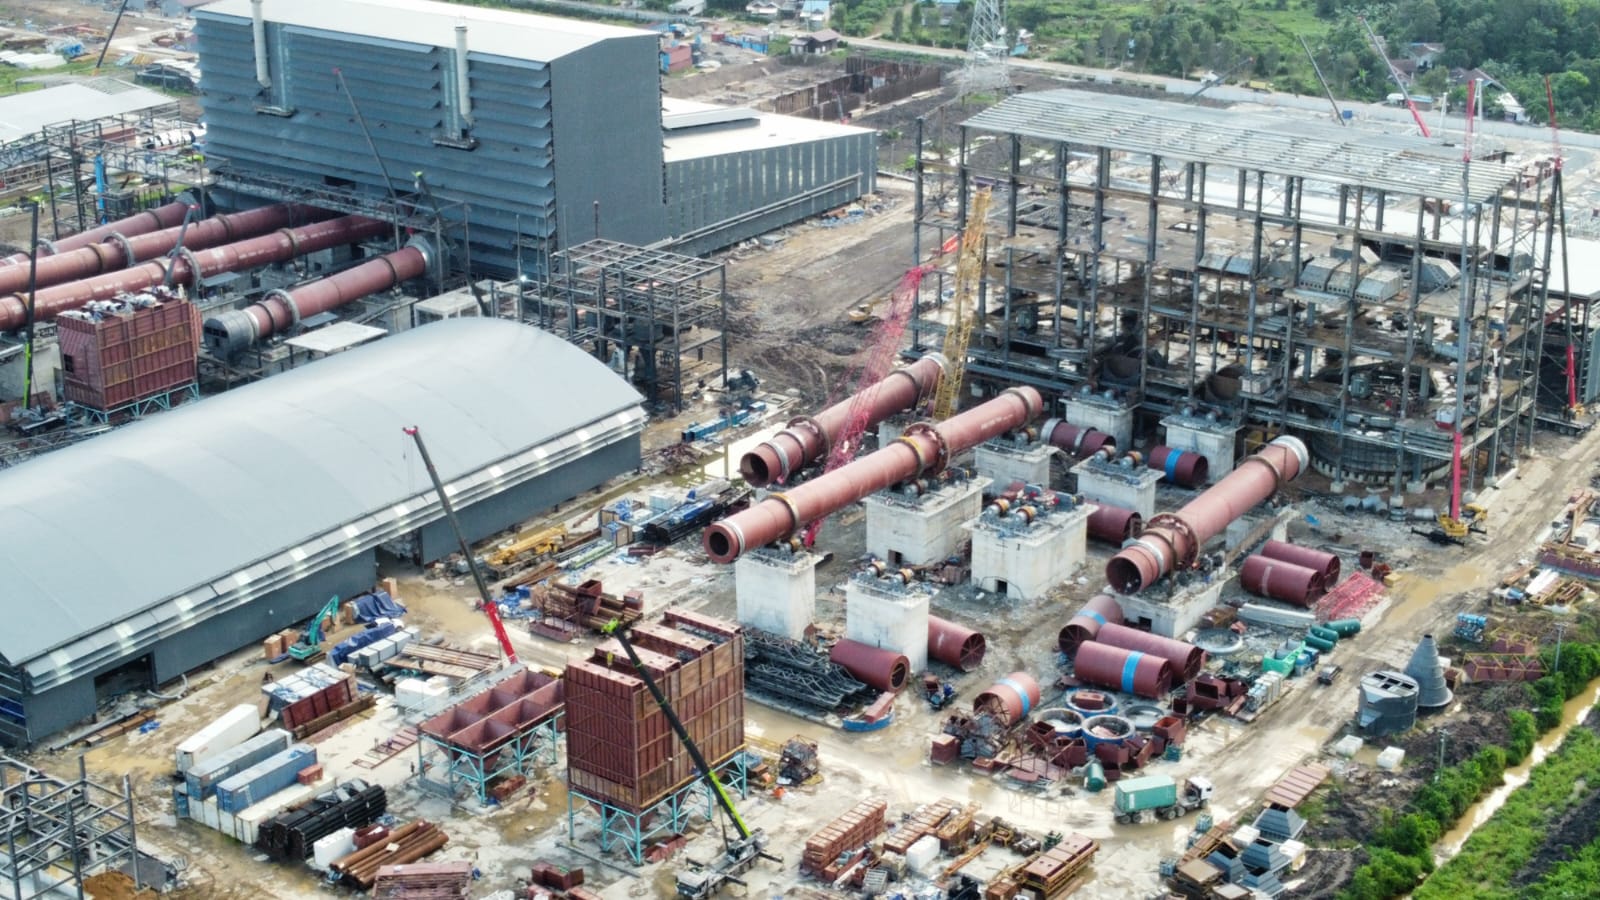 Pembangunan industri smelter di Kelurahan Pendingin, Sangasanga, Kutai Kartanegara. Luas area hak guna bangunan perusahaan seluas 400 hektare.  FOTO: TIM KLUB JURNALIS INVESTIGASI SAMARINDA